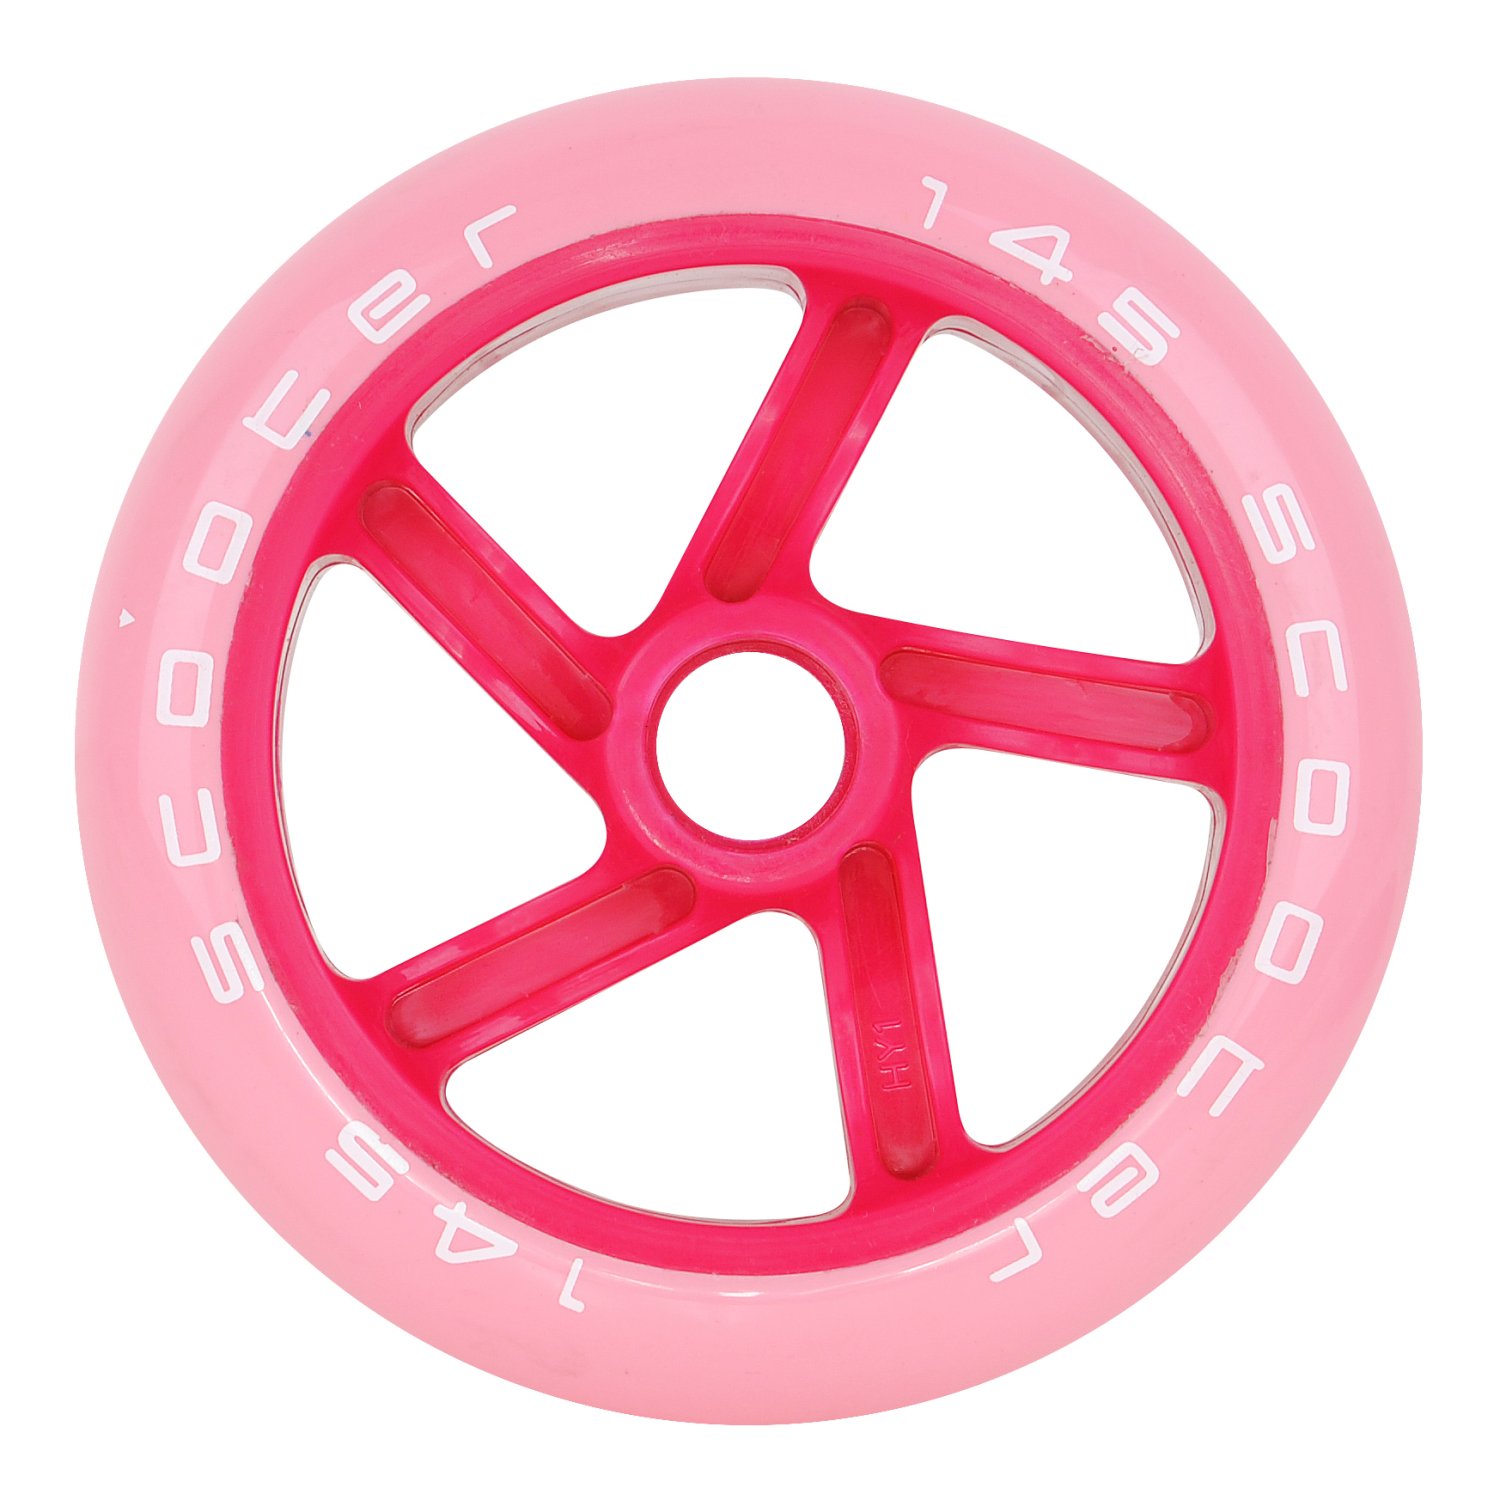 Колесо для самоката Tempish 2018 PU, 145x30 mm, 87A, розовый колесо для самоката tempish 2018 pu 200x30 mm 87a